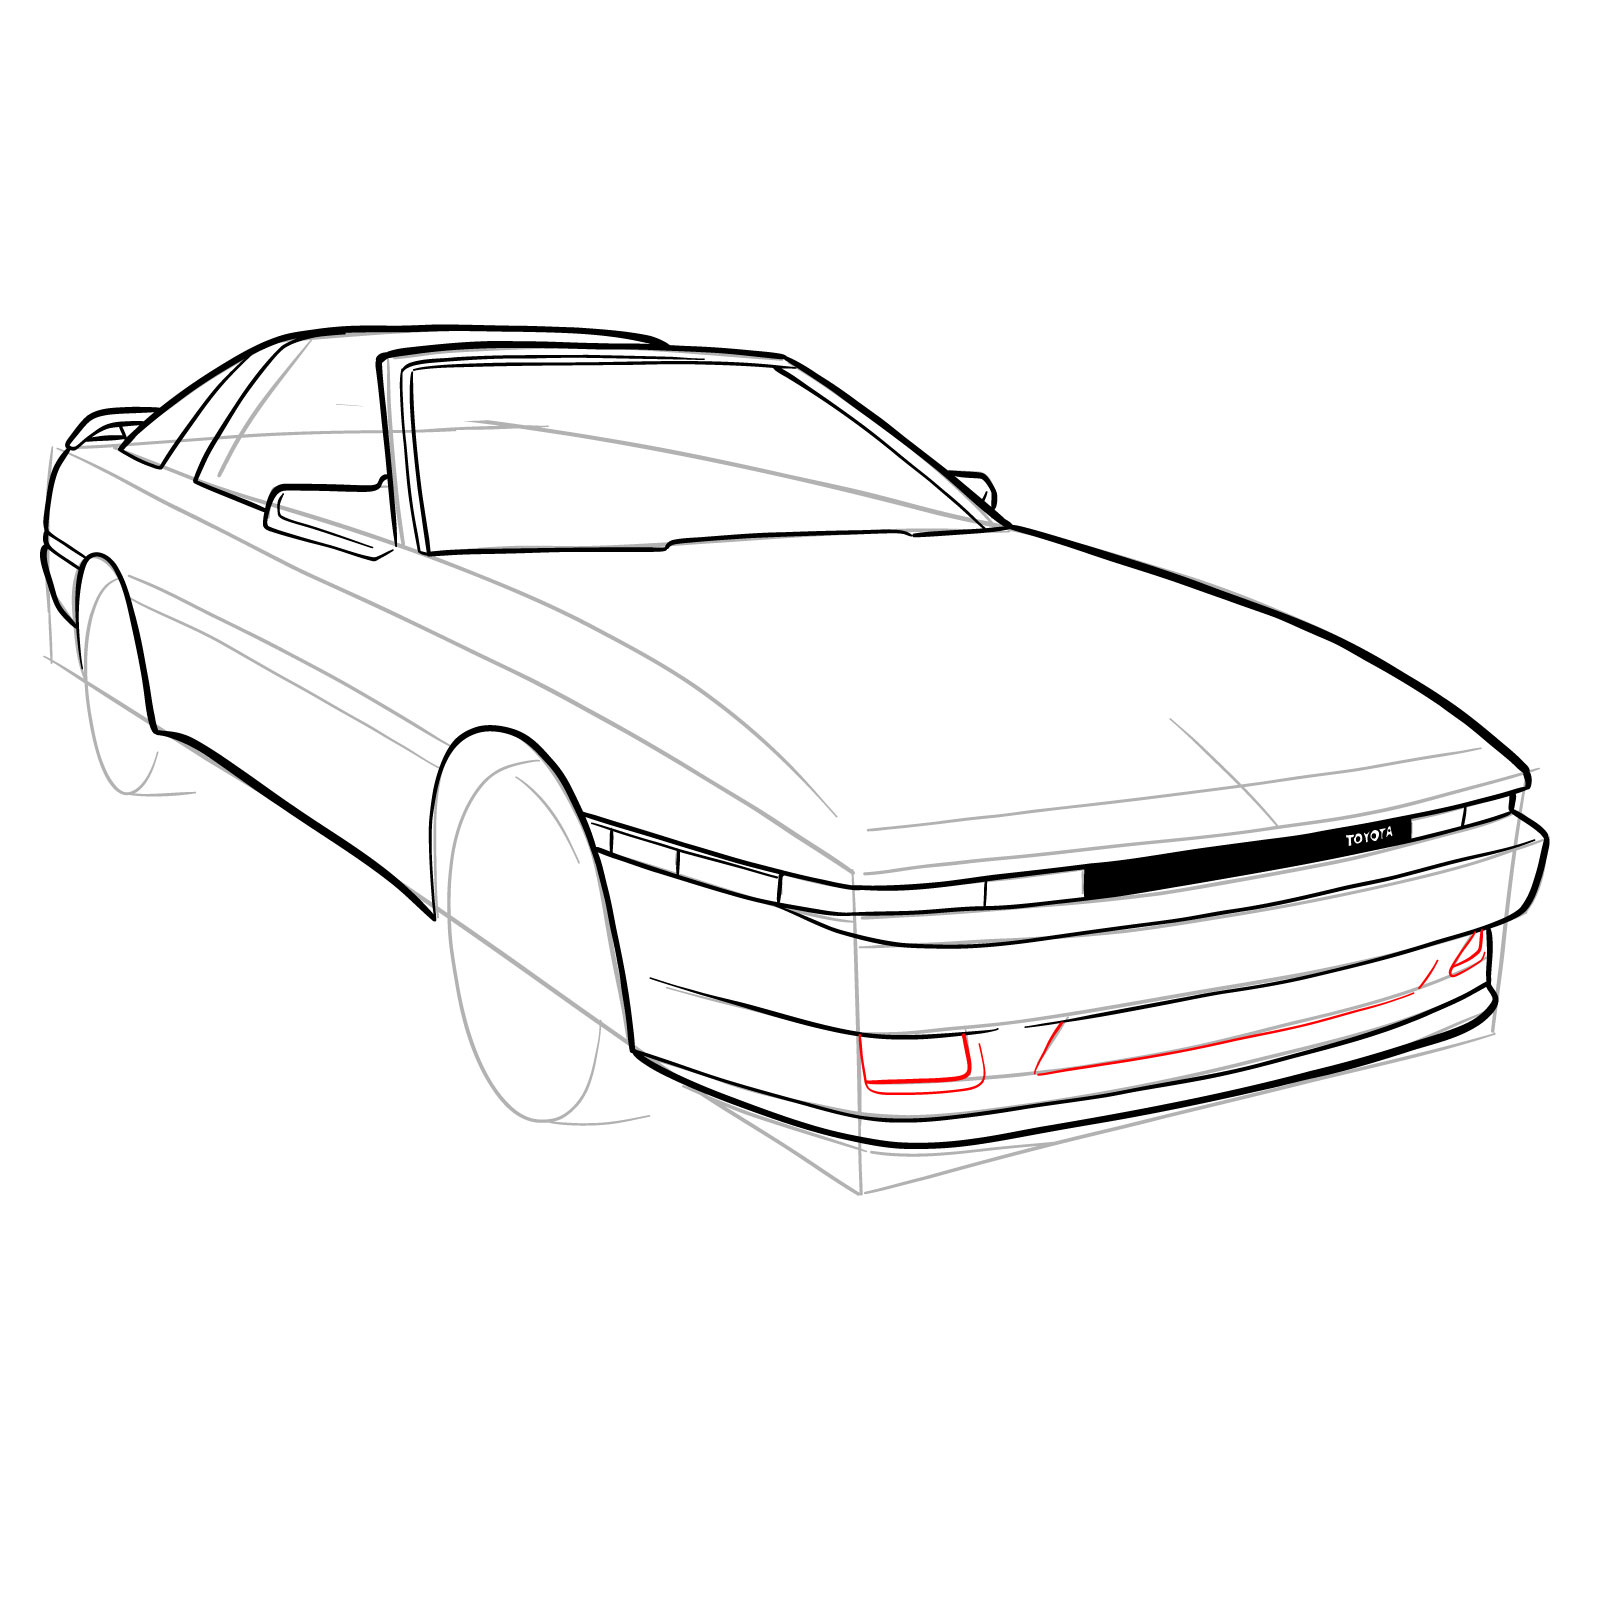 How to draw a 1988 Toyota Supra Turbo MK 3 - step 19